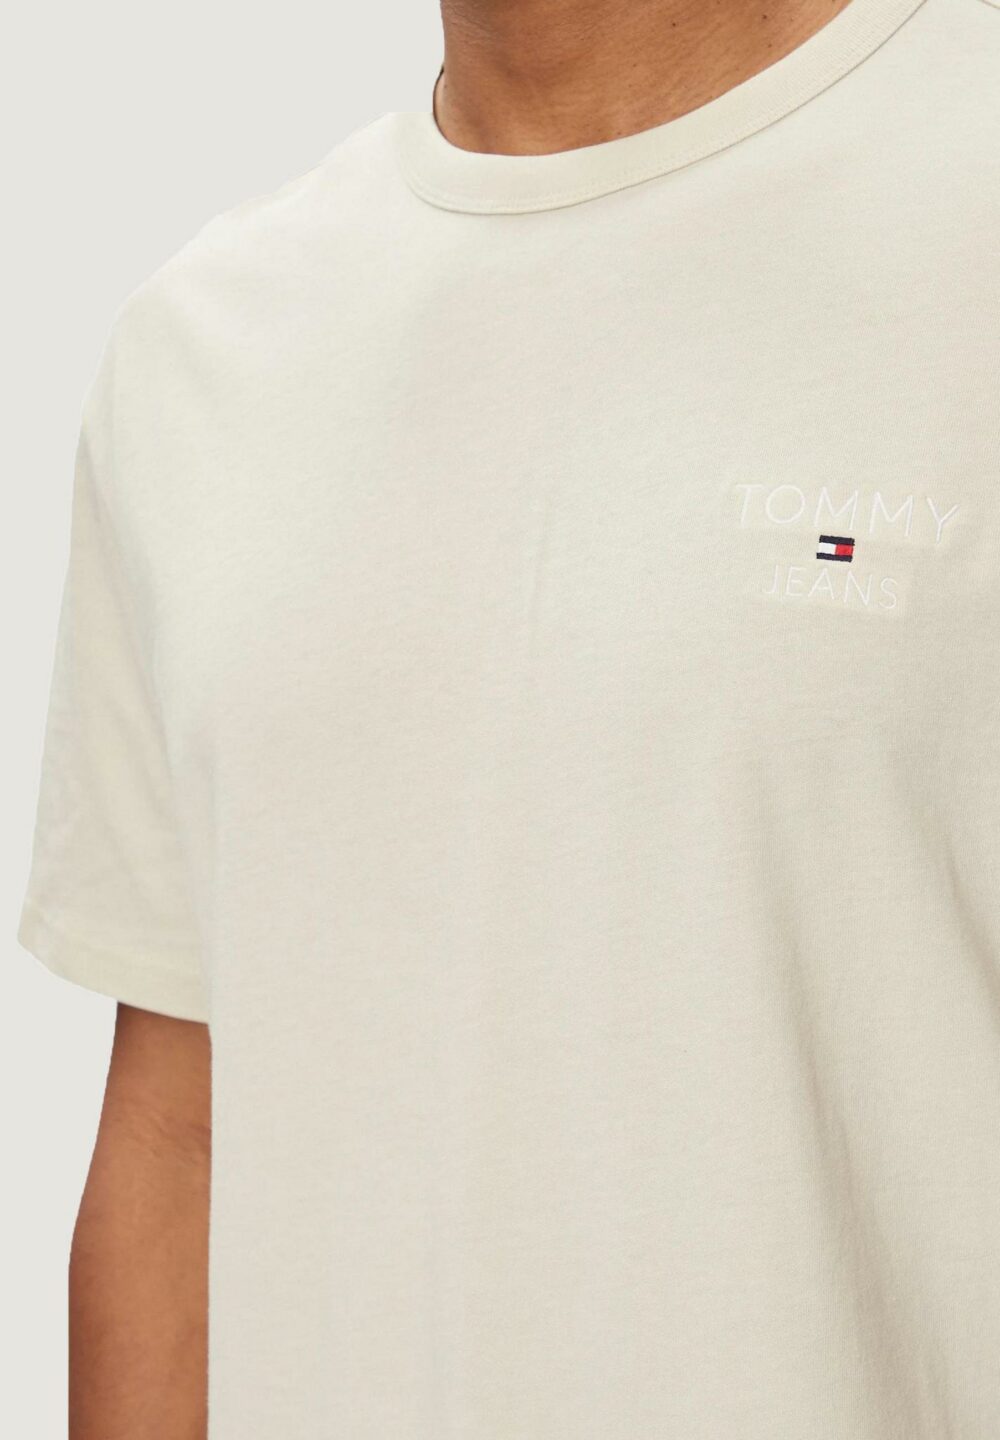 T-shirt Tommy Hilfiger Jeans REG CORP Beige chiaro - Foto 2